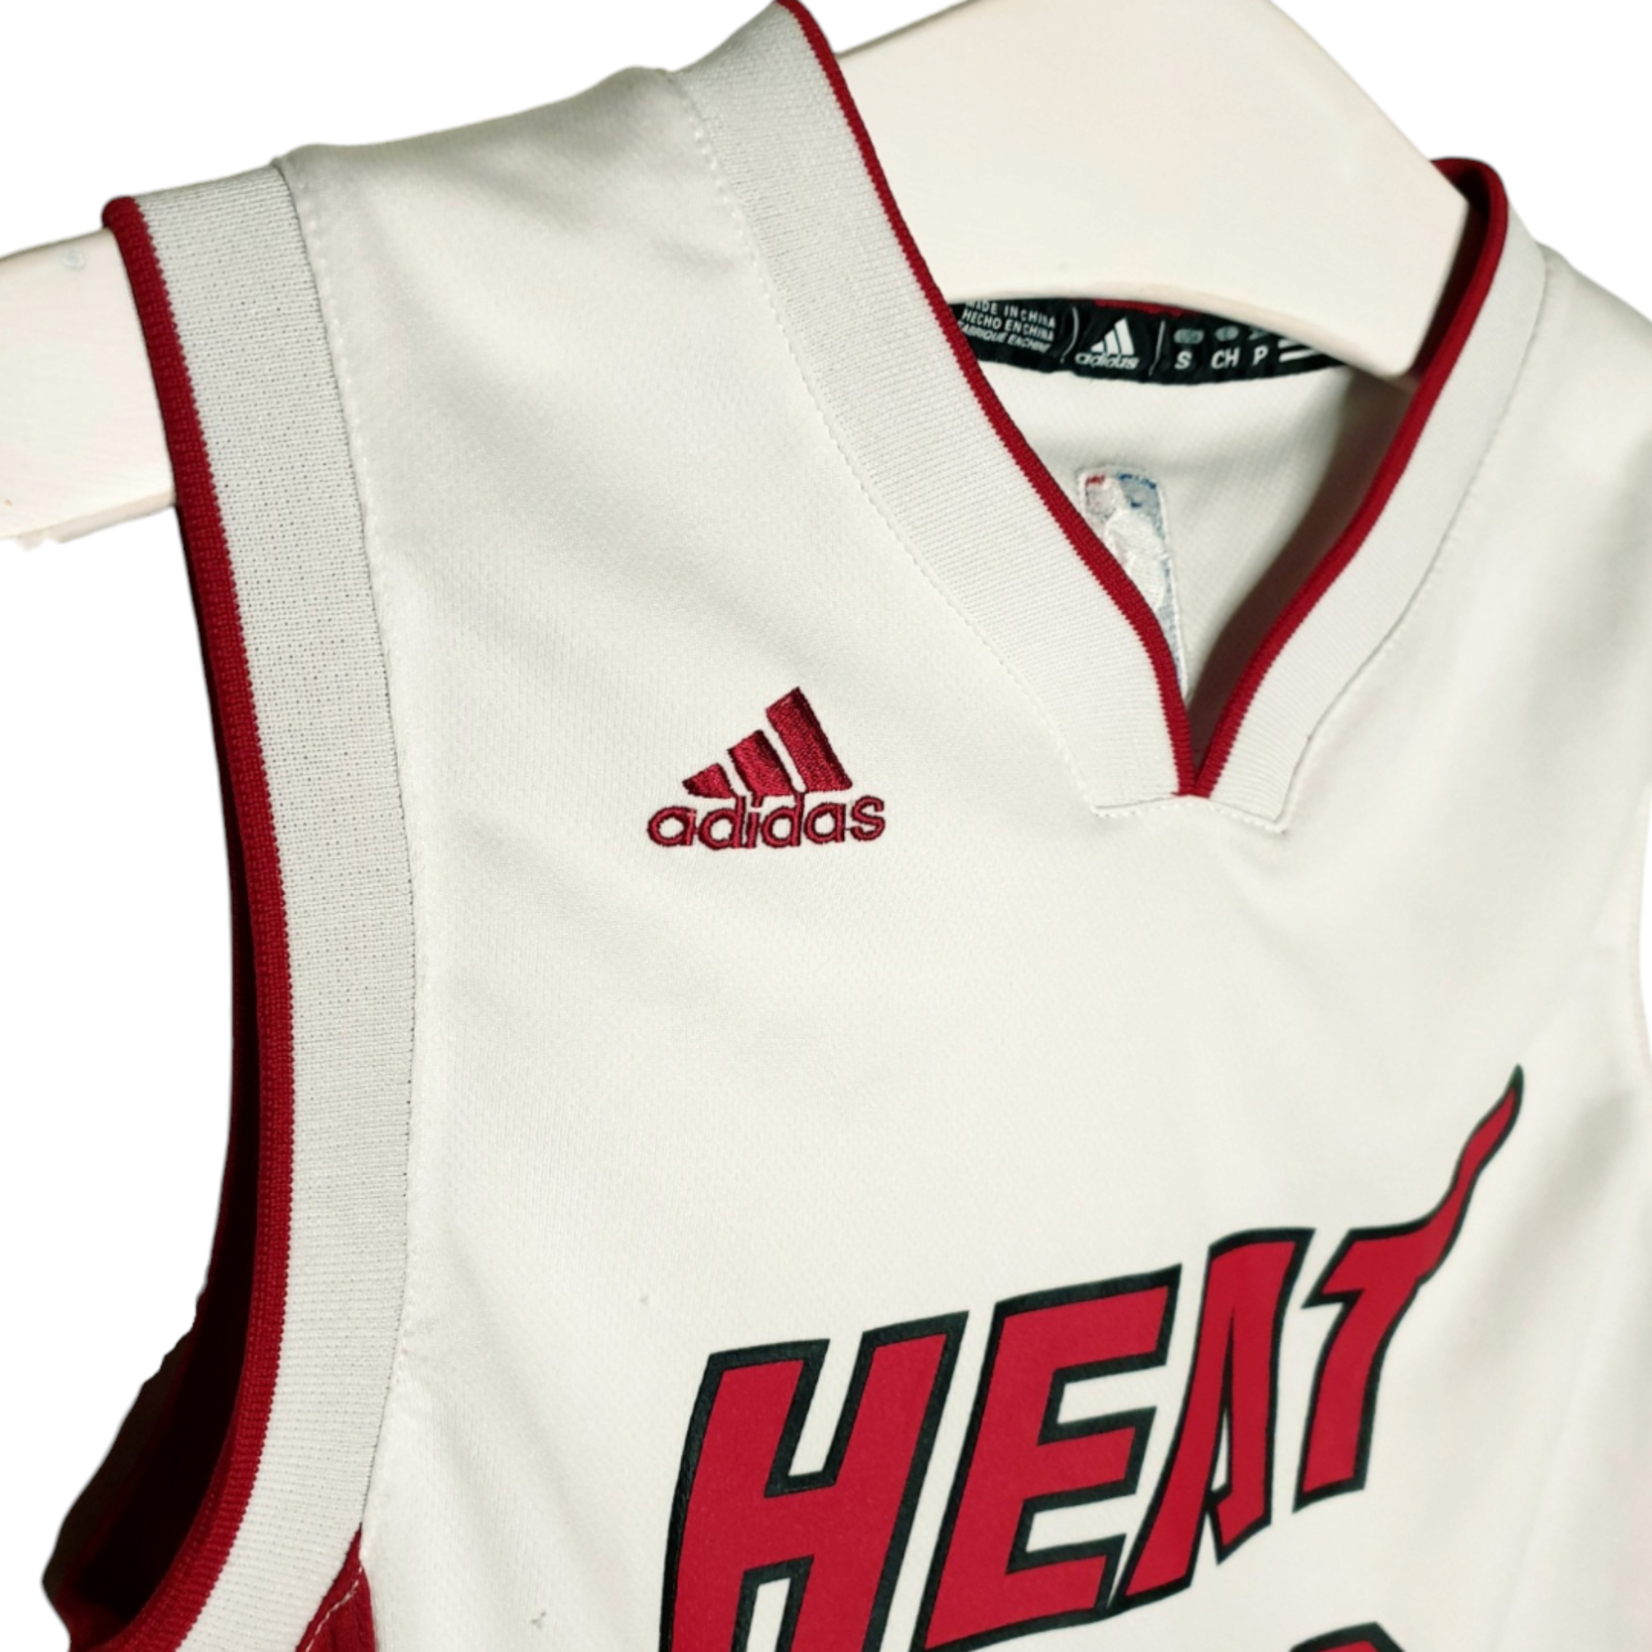 Adidas Original Adidas vintage NBA jersey Miami Heat - Lebron James